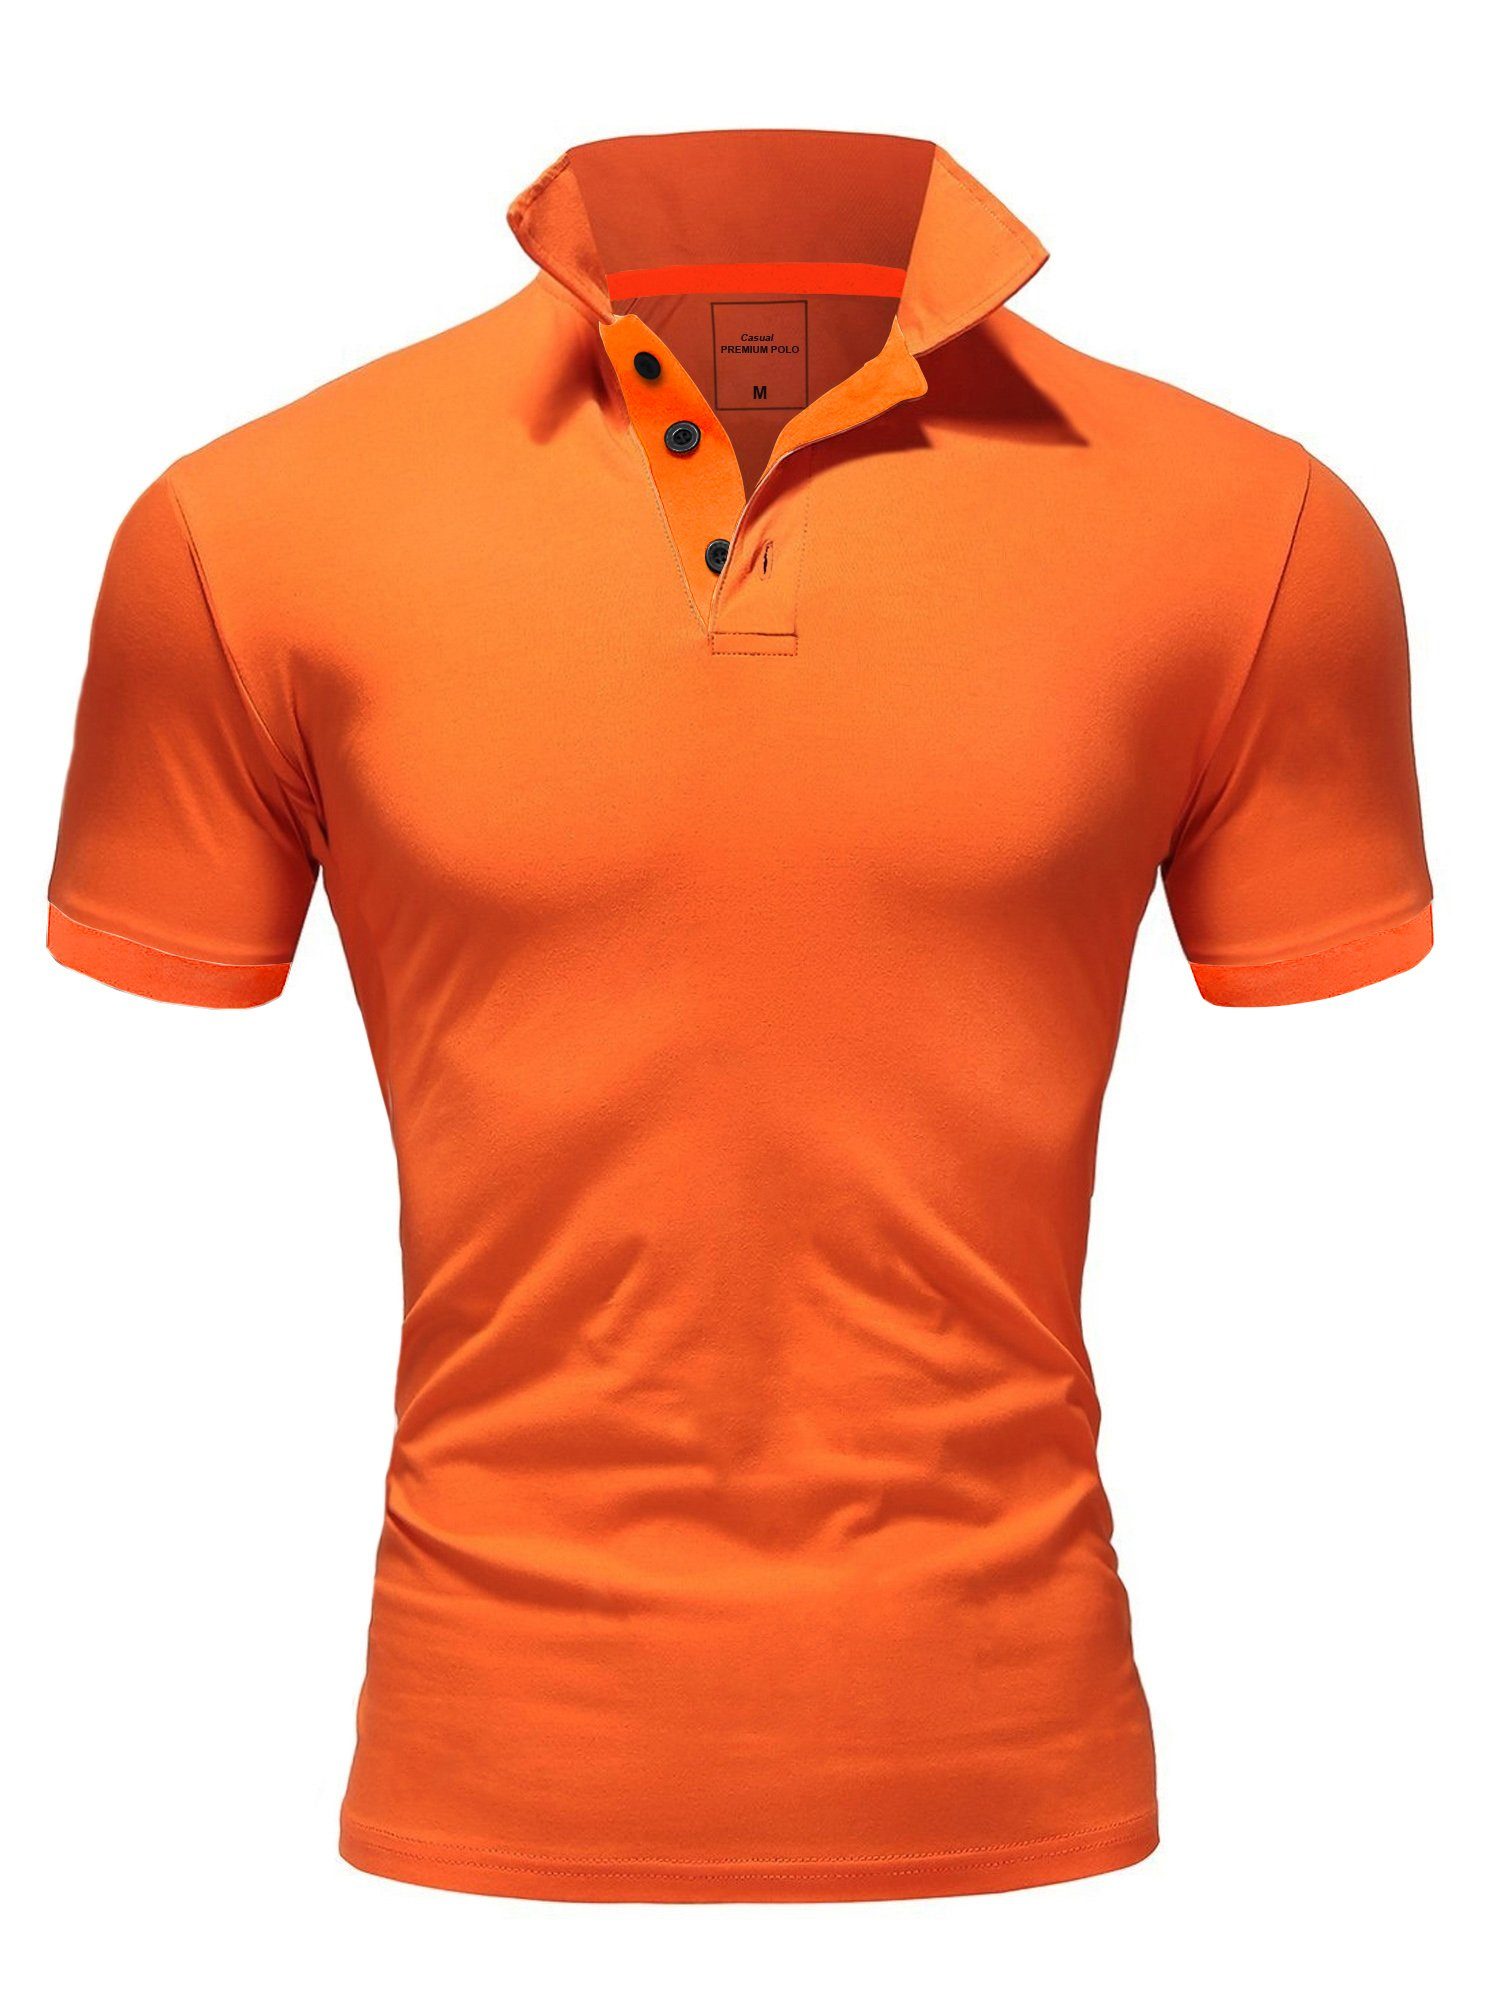 Amaci&Sons Poloshirt MAINE Basic Kurzarm Poloshirt Orange